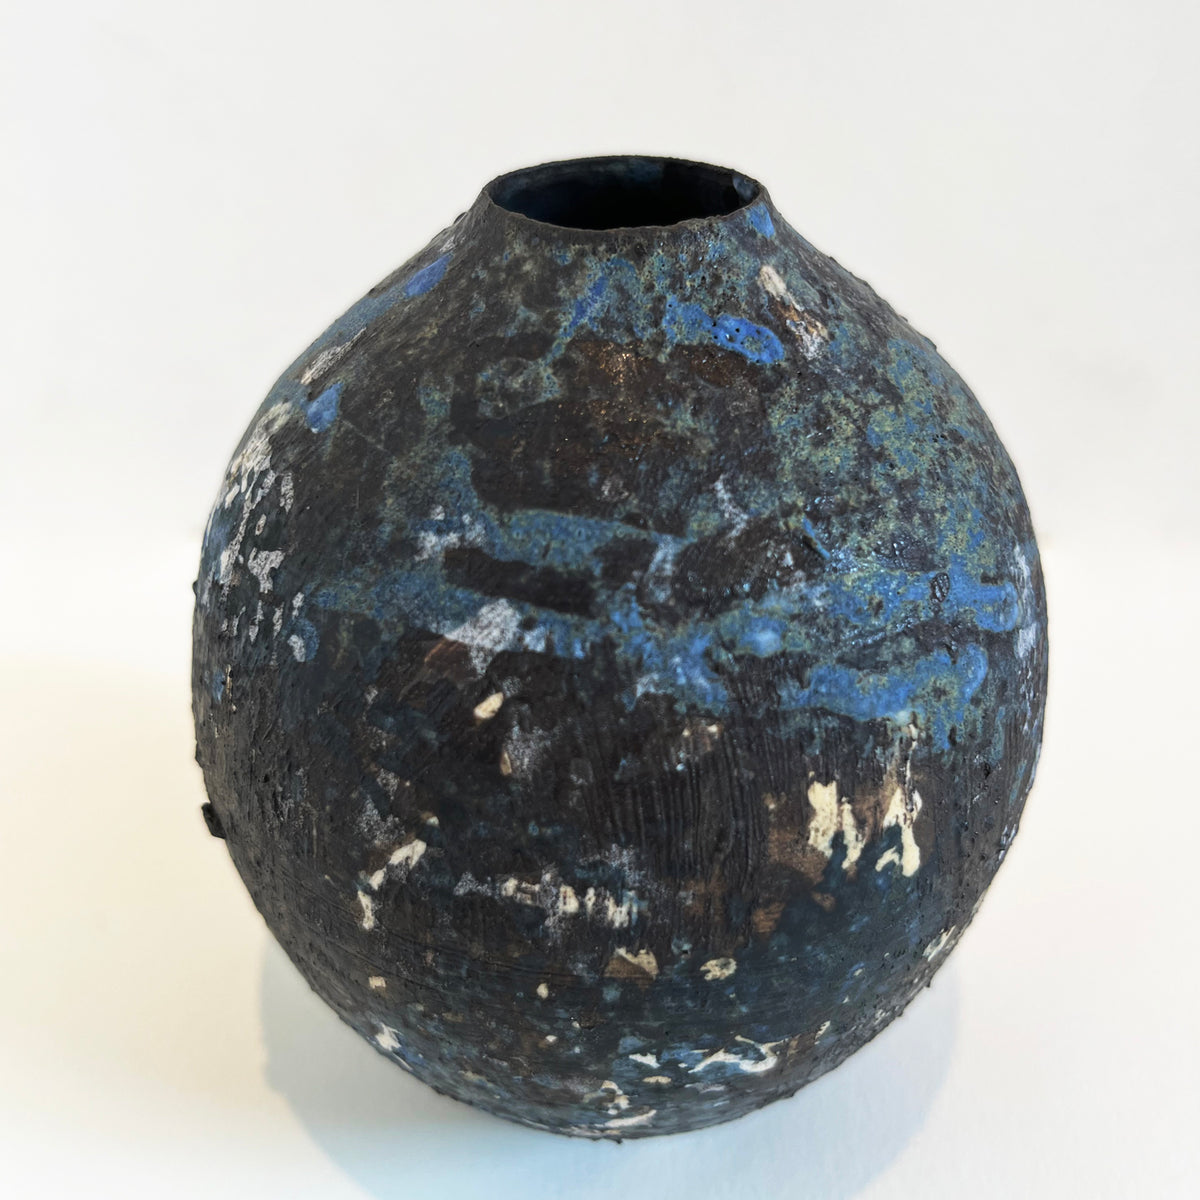 Makiko Hicher - Small Round Vase, 5" x 3.75" x 3.75"